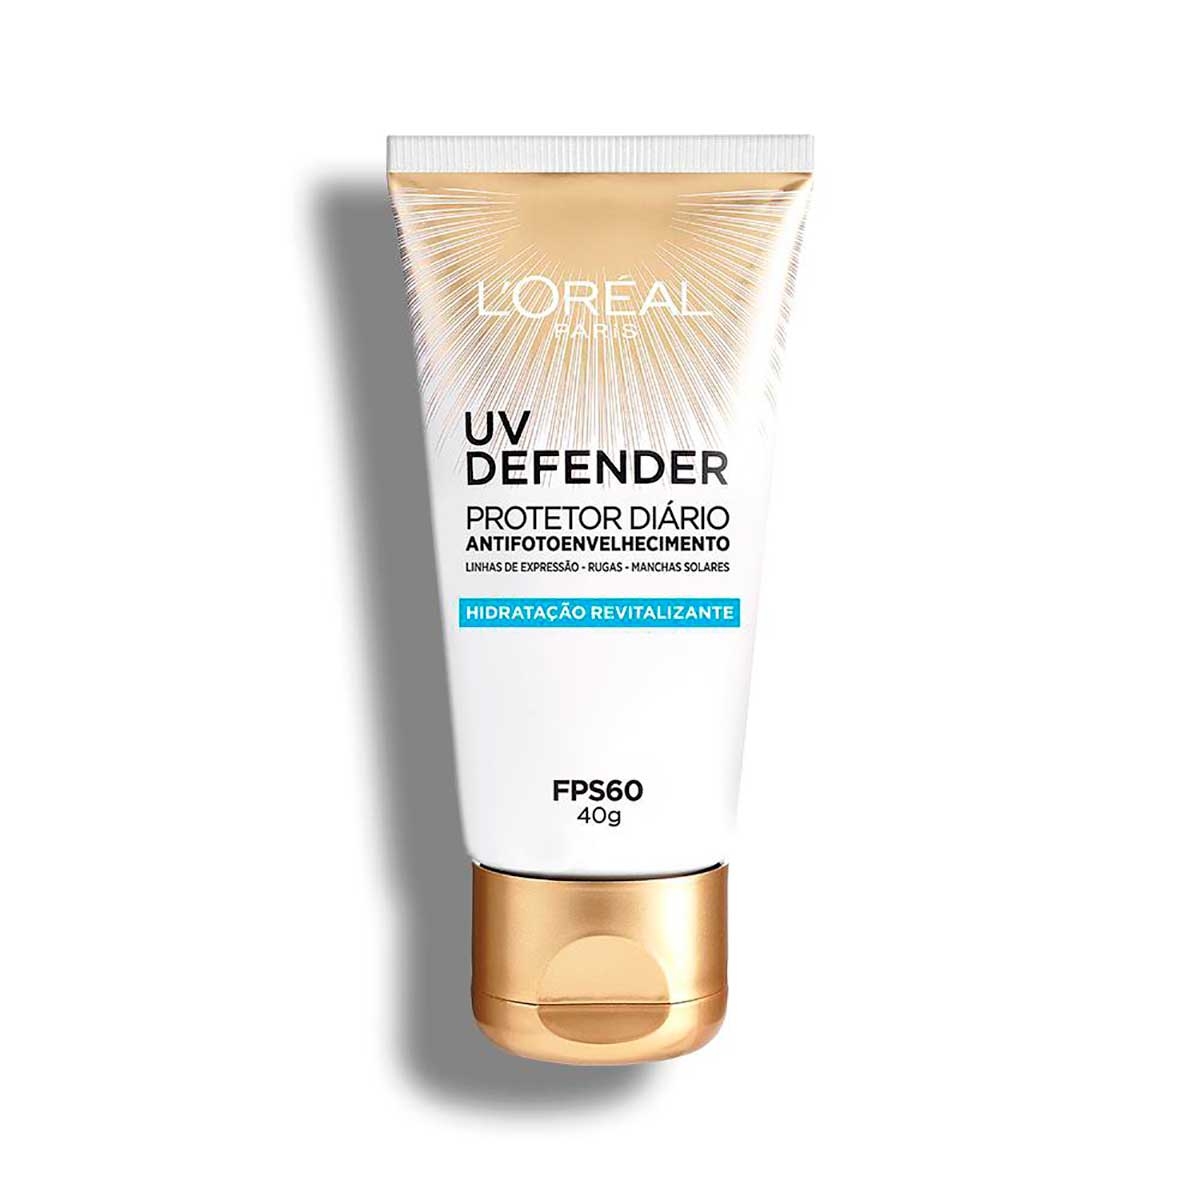 Protetor Solar Facial Anti-Idade L'Oréal UV Defender FPS 60 com 40g 40g